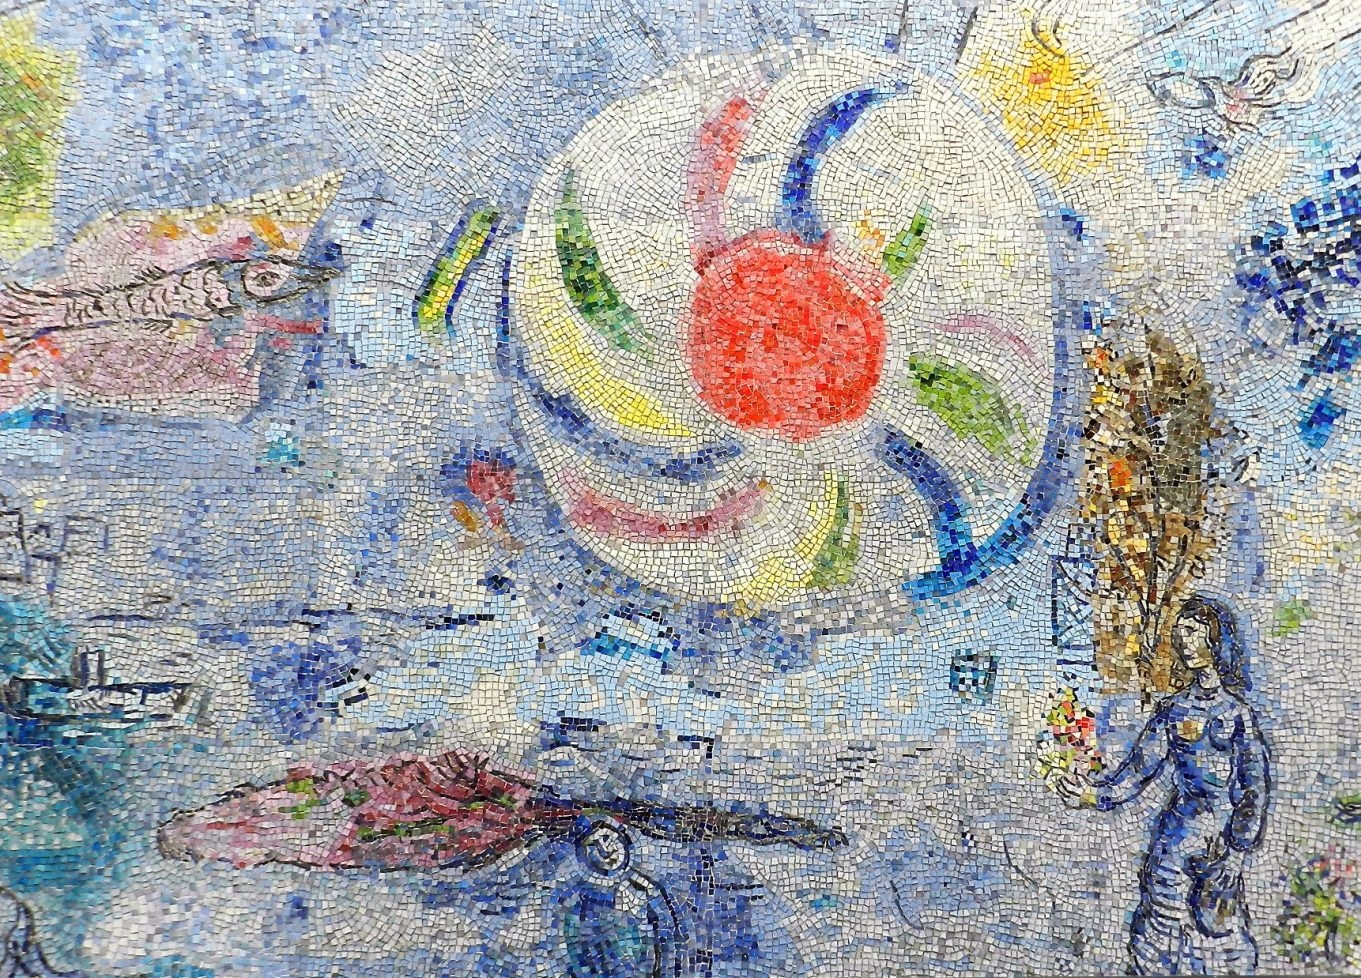 Marc+Chagall-1887-1985 (17).jpg